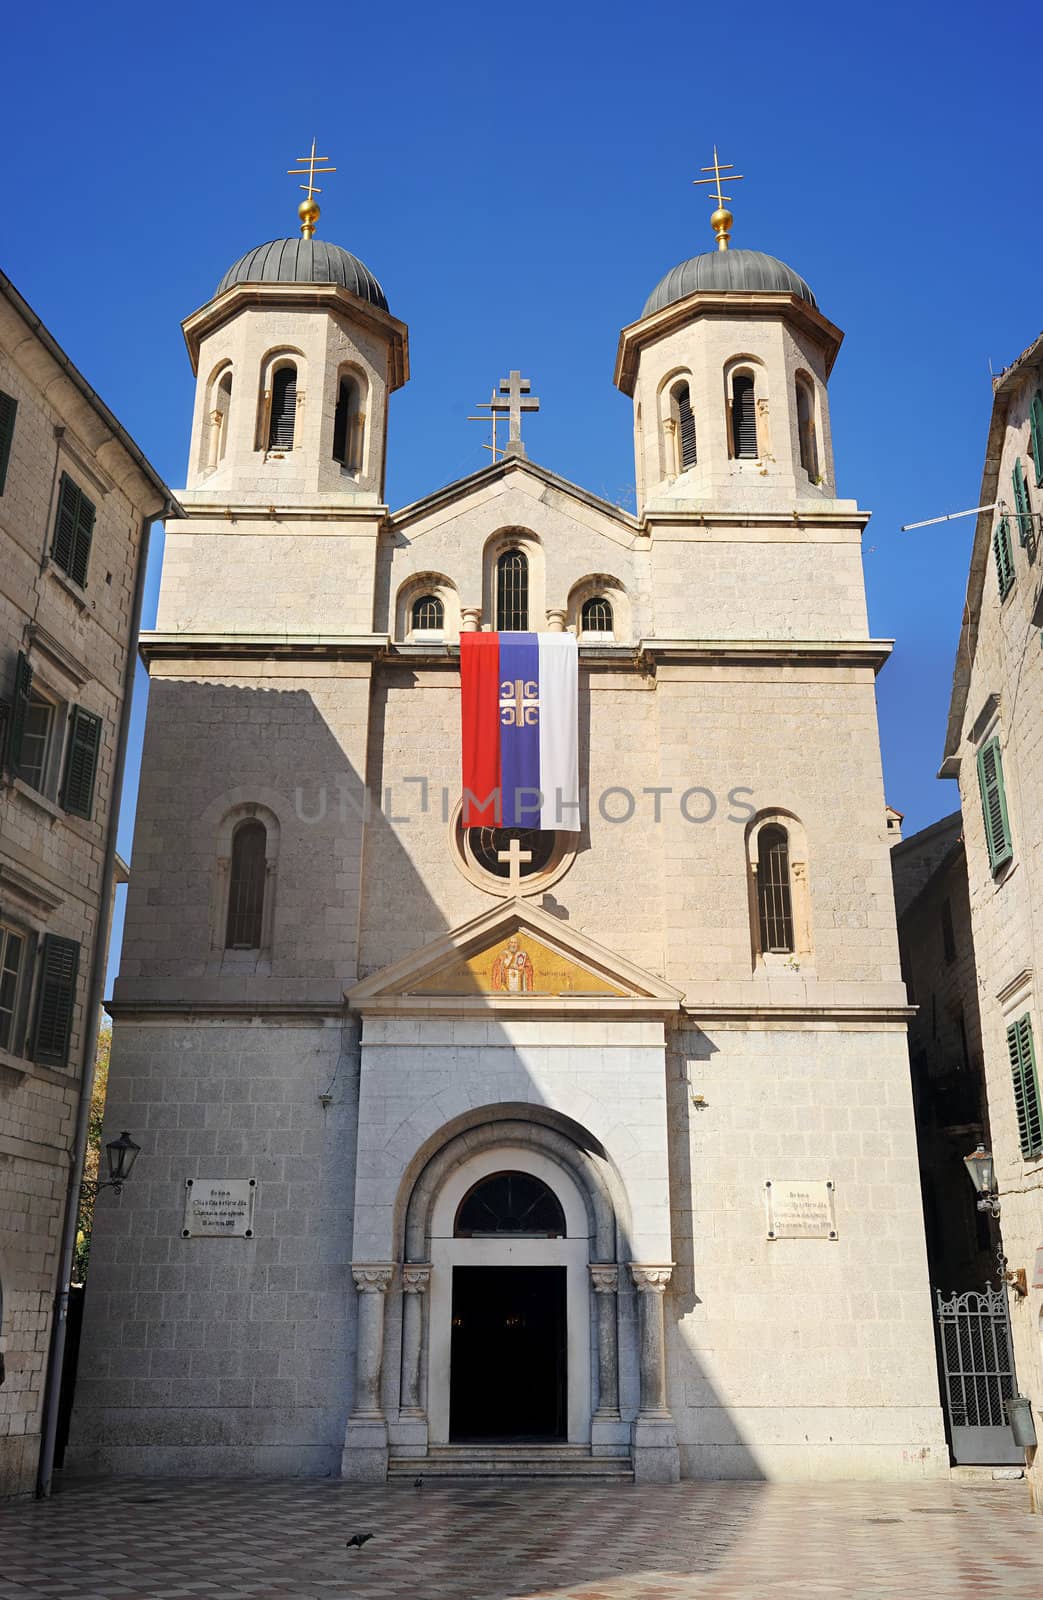 St. Nicholas church on St. Luke square in Kotor old town. Montenegro
